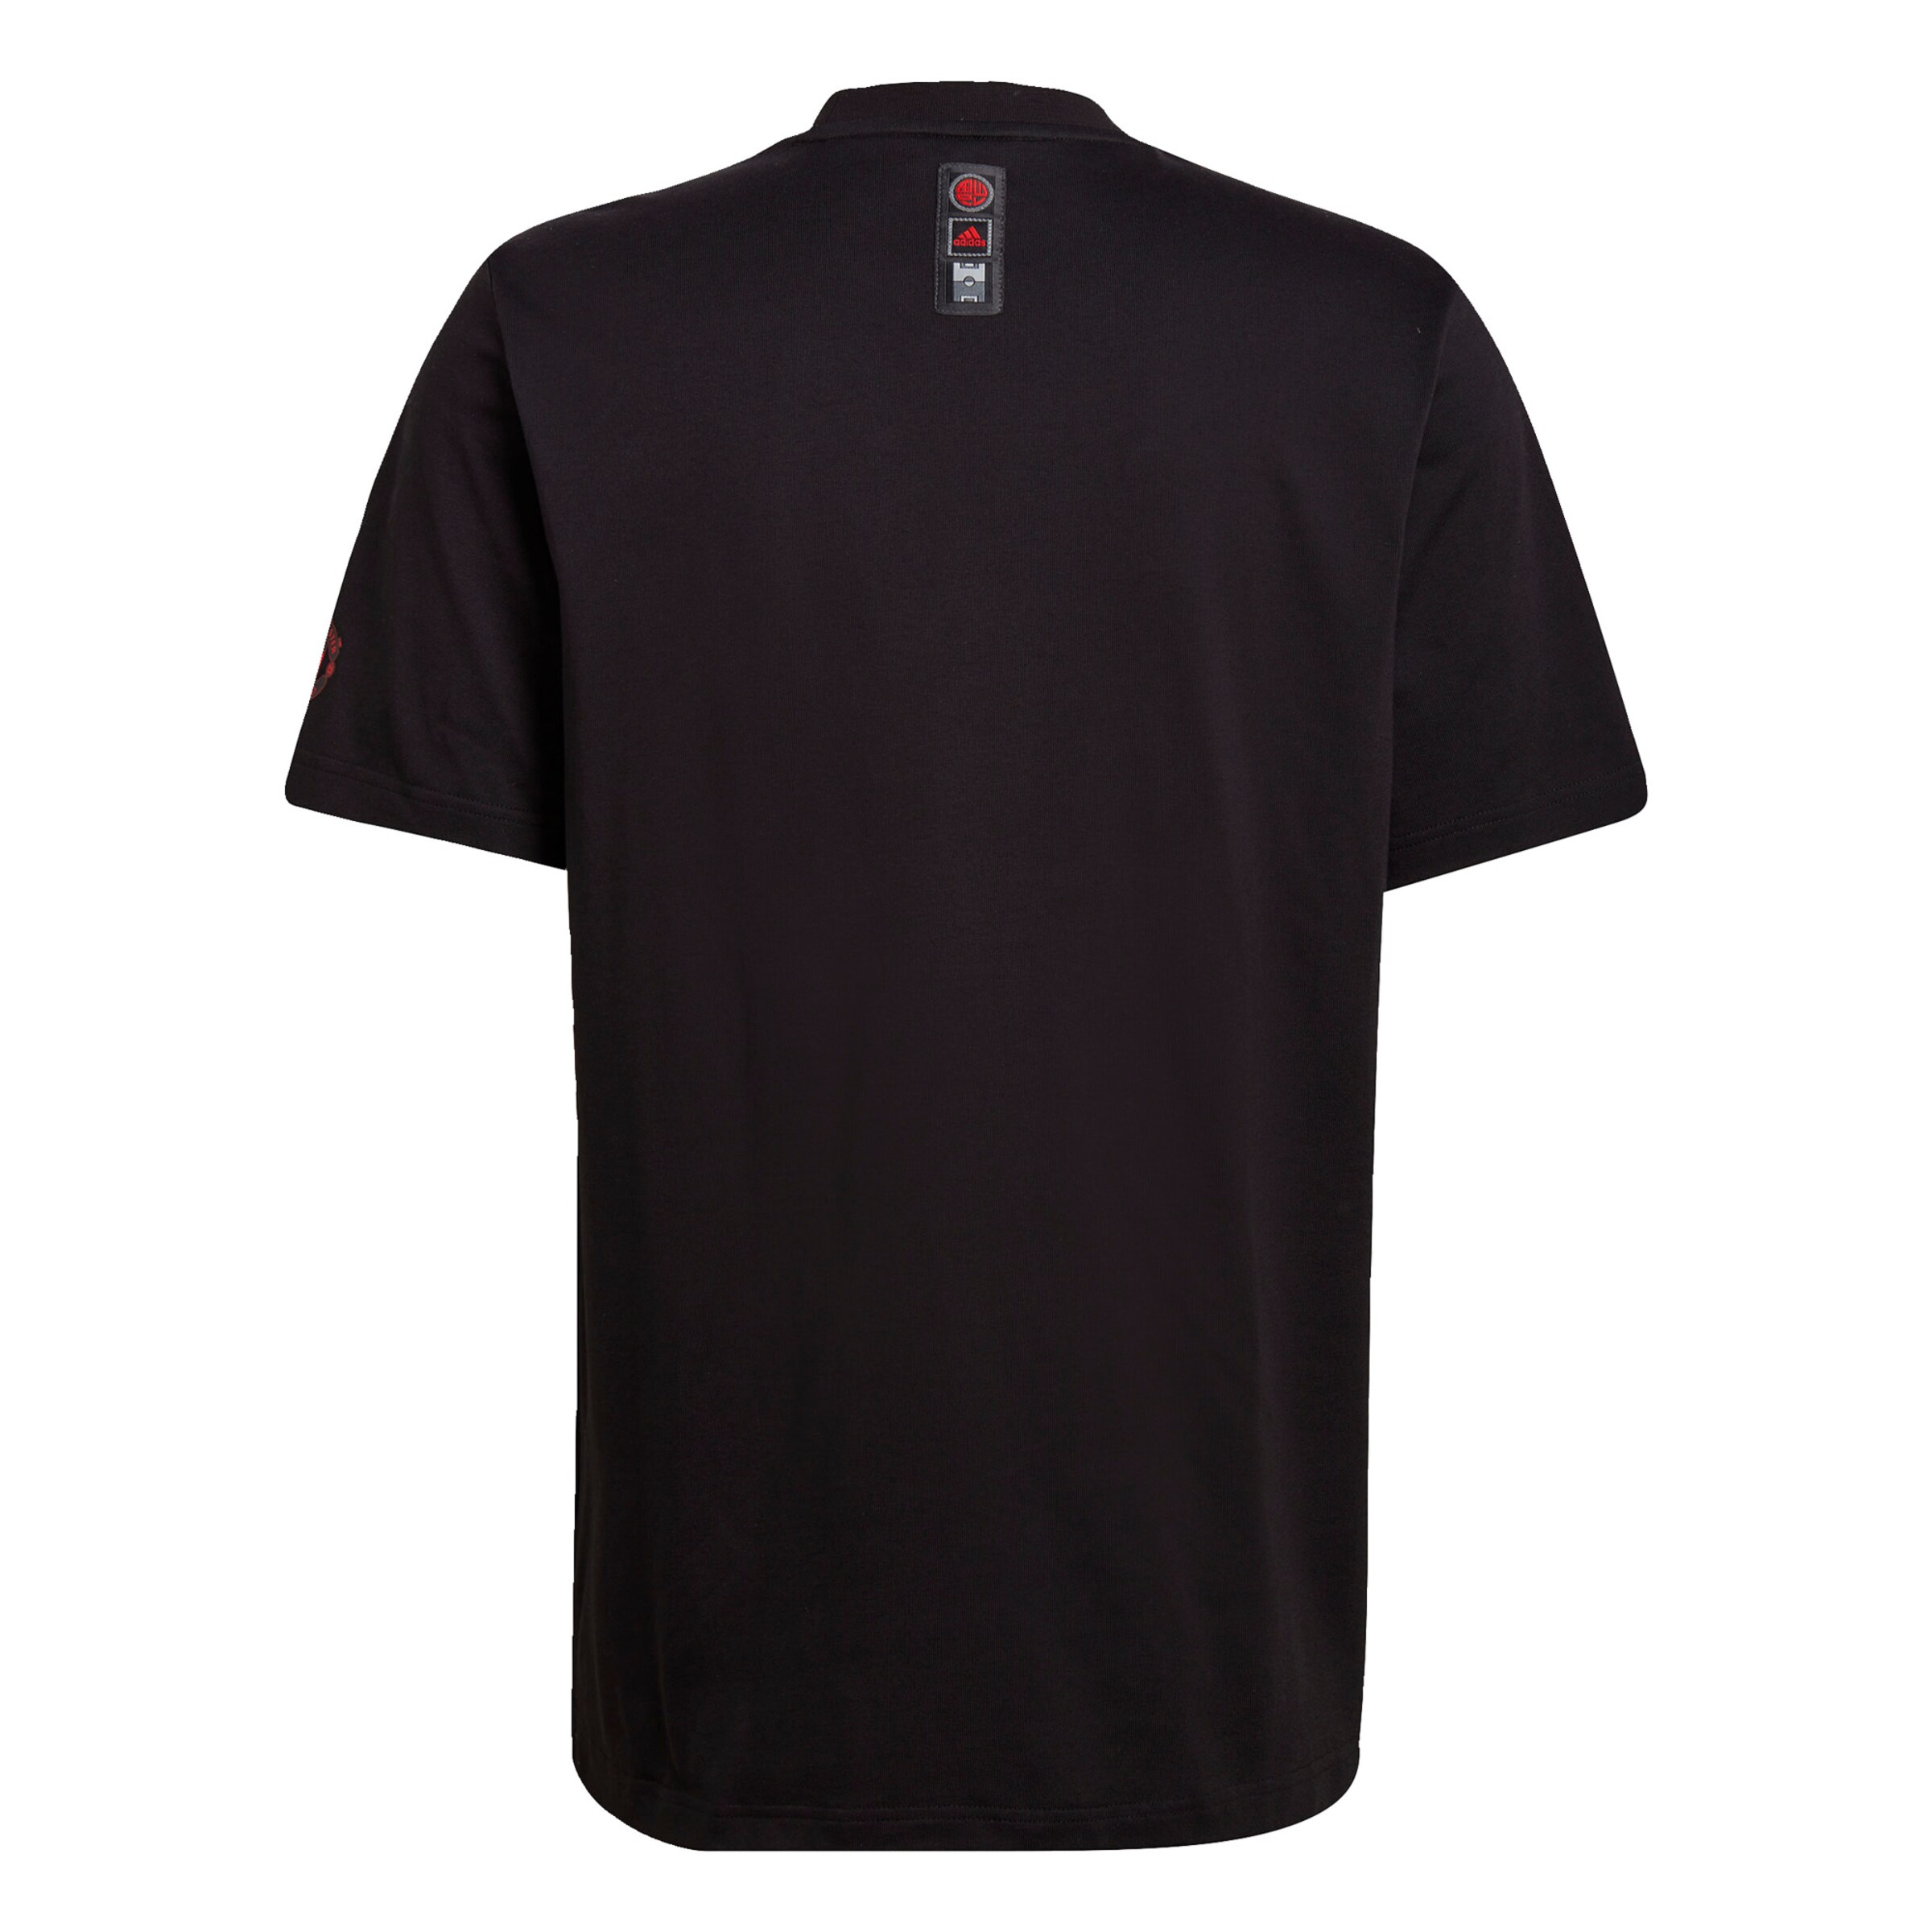 Disciplines sportives T-Shirt fonctionnel Manchester United CNY ADIDAS PERFORMANCE en Noir 